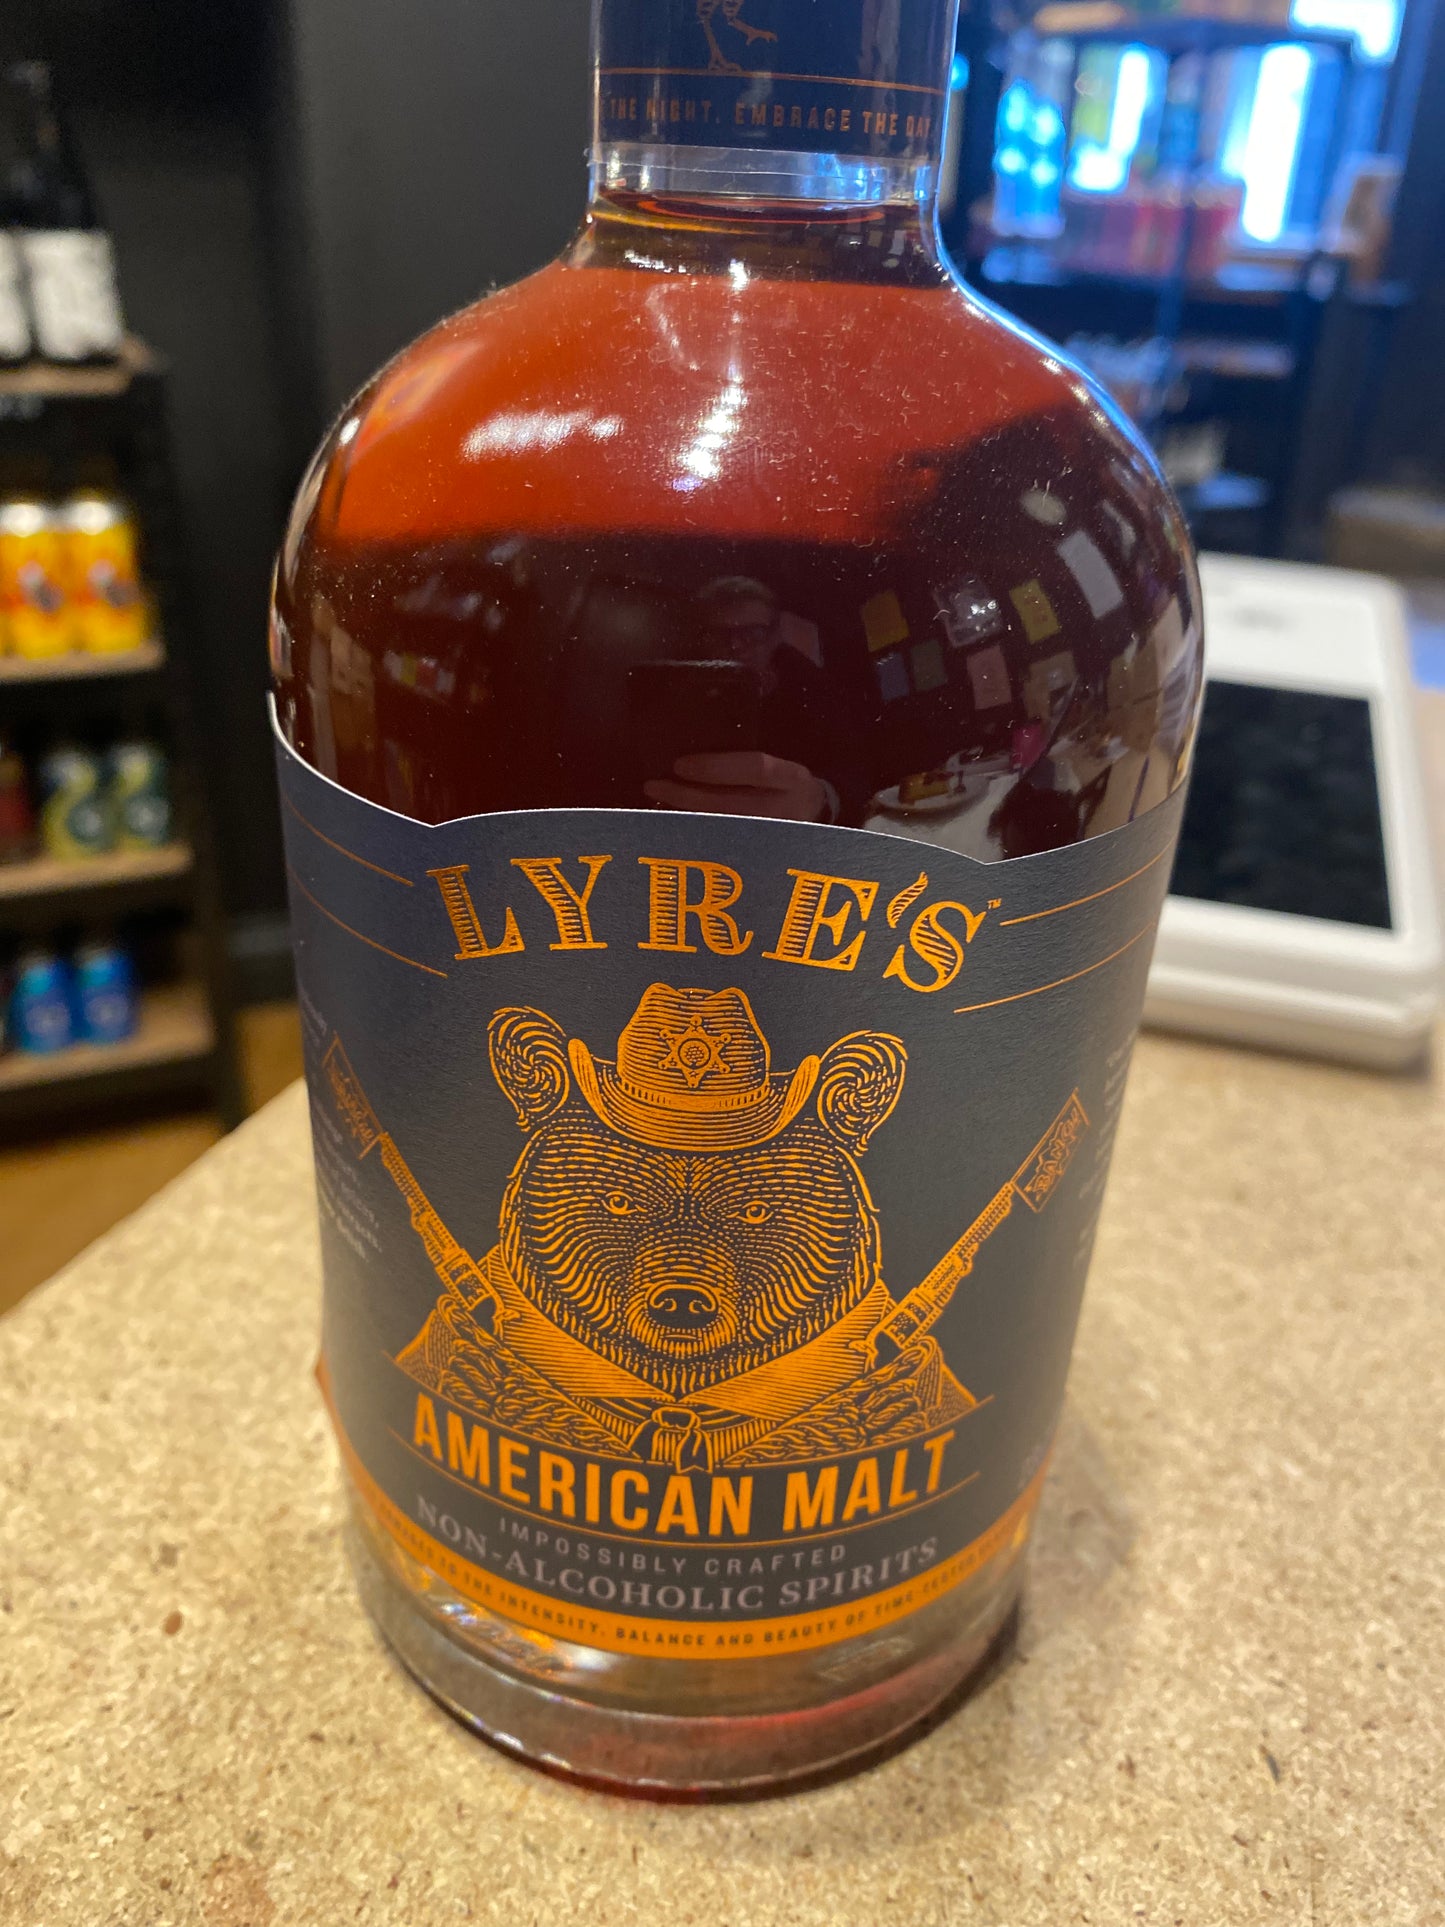 Lyre’s American Malt (Bourbon) Spirit